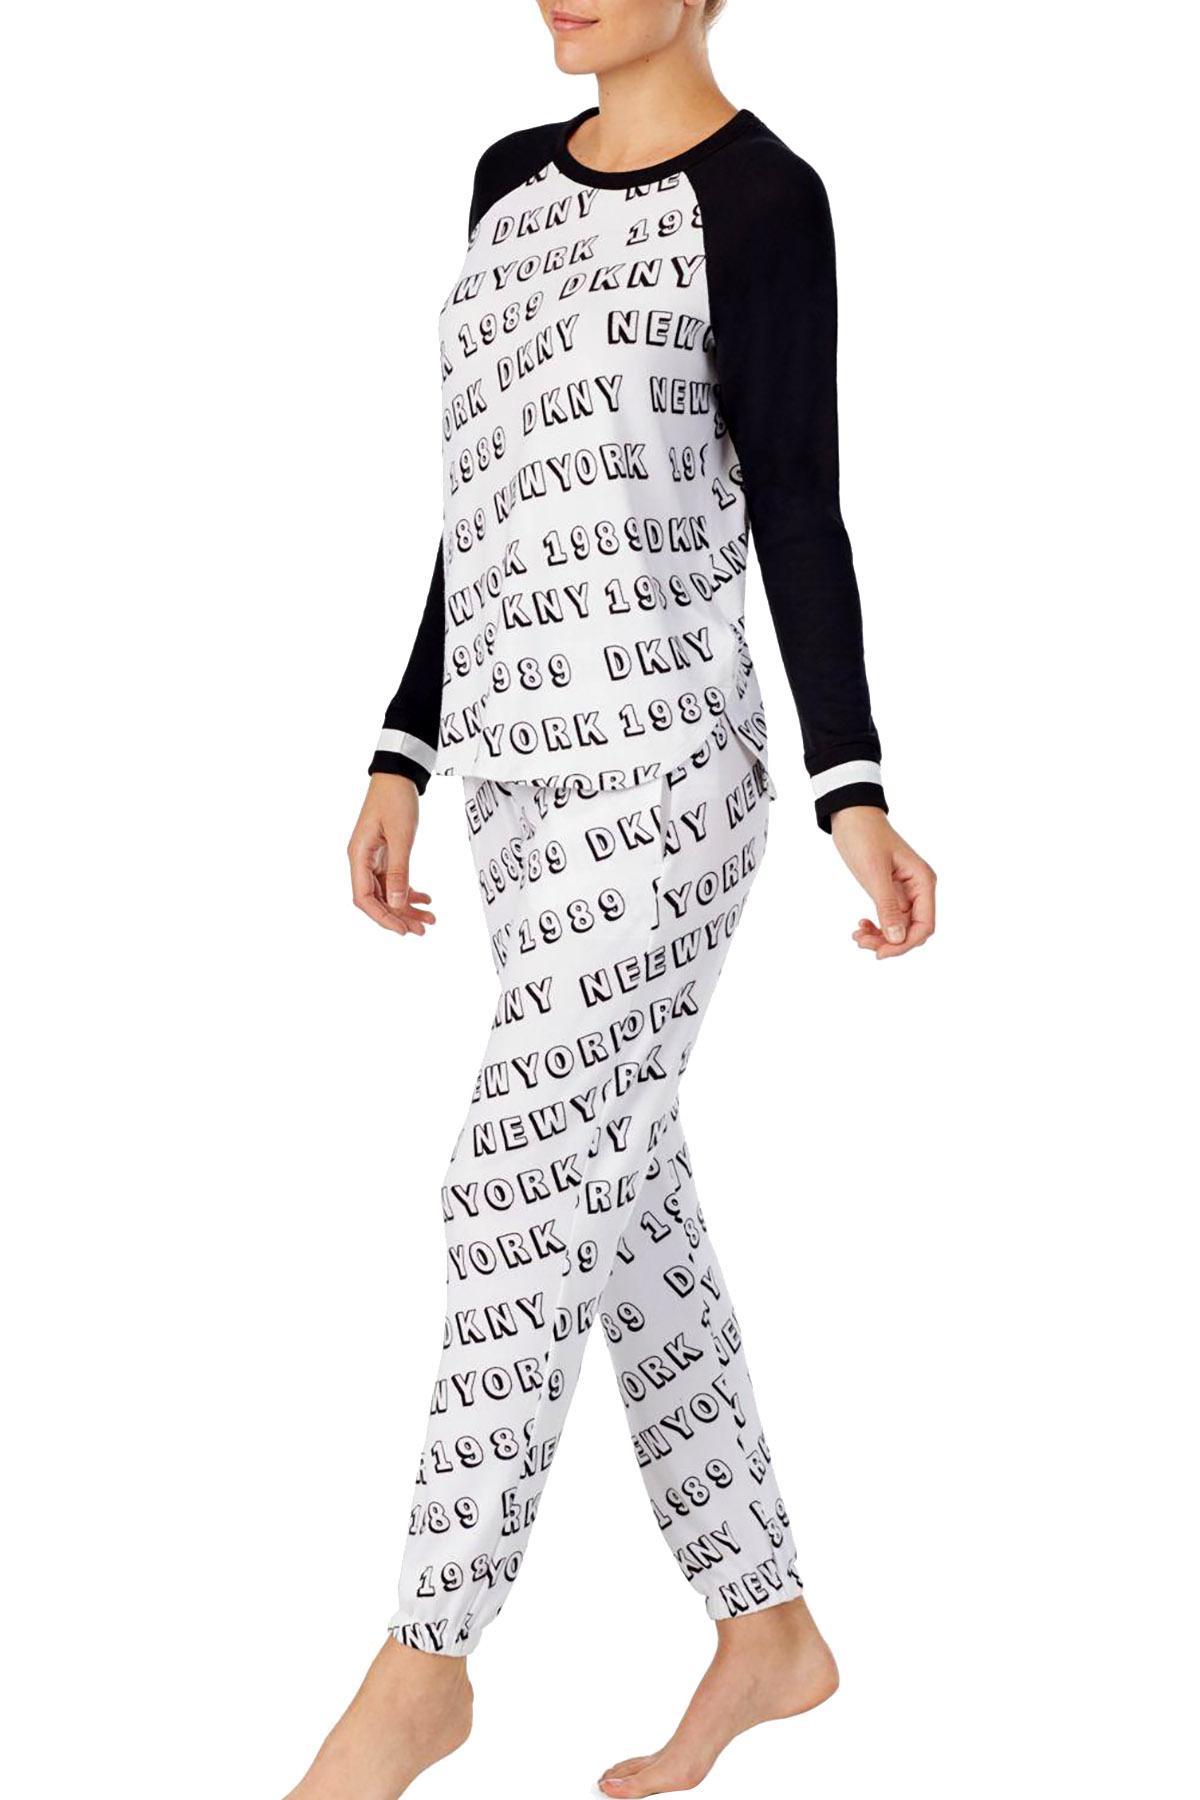 DKNY White/Black Printed Raglan Top / Jogger Pant Pajama Set